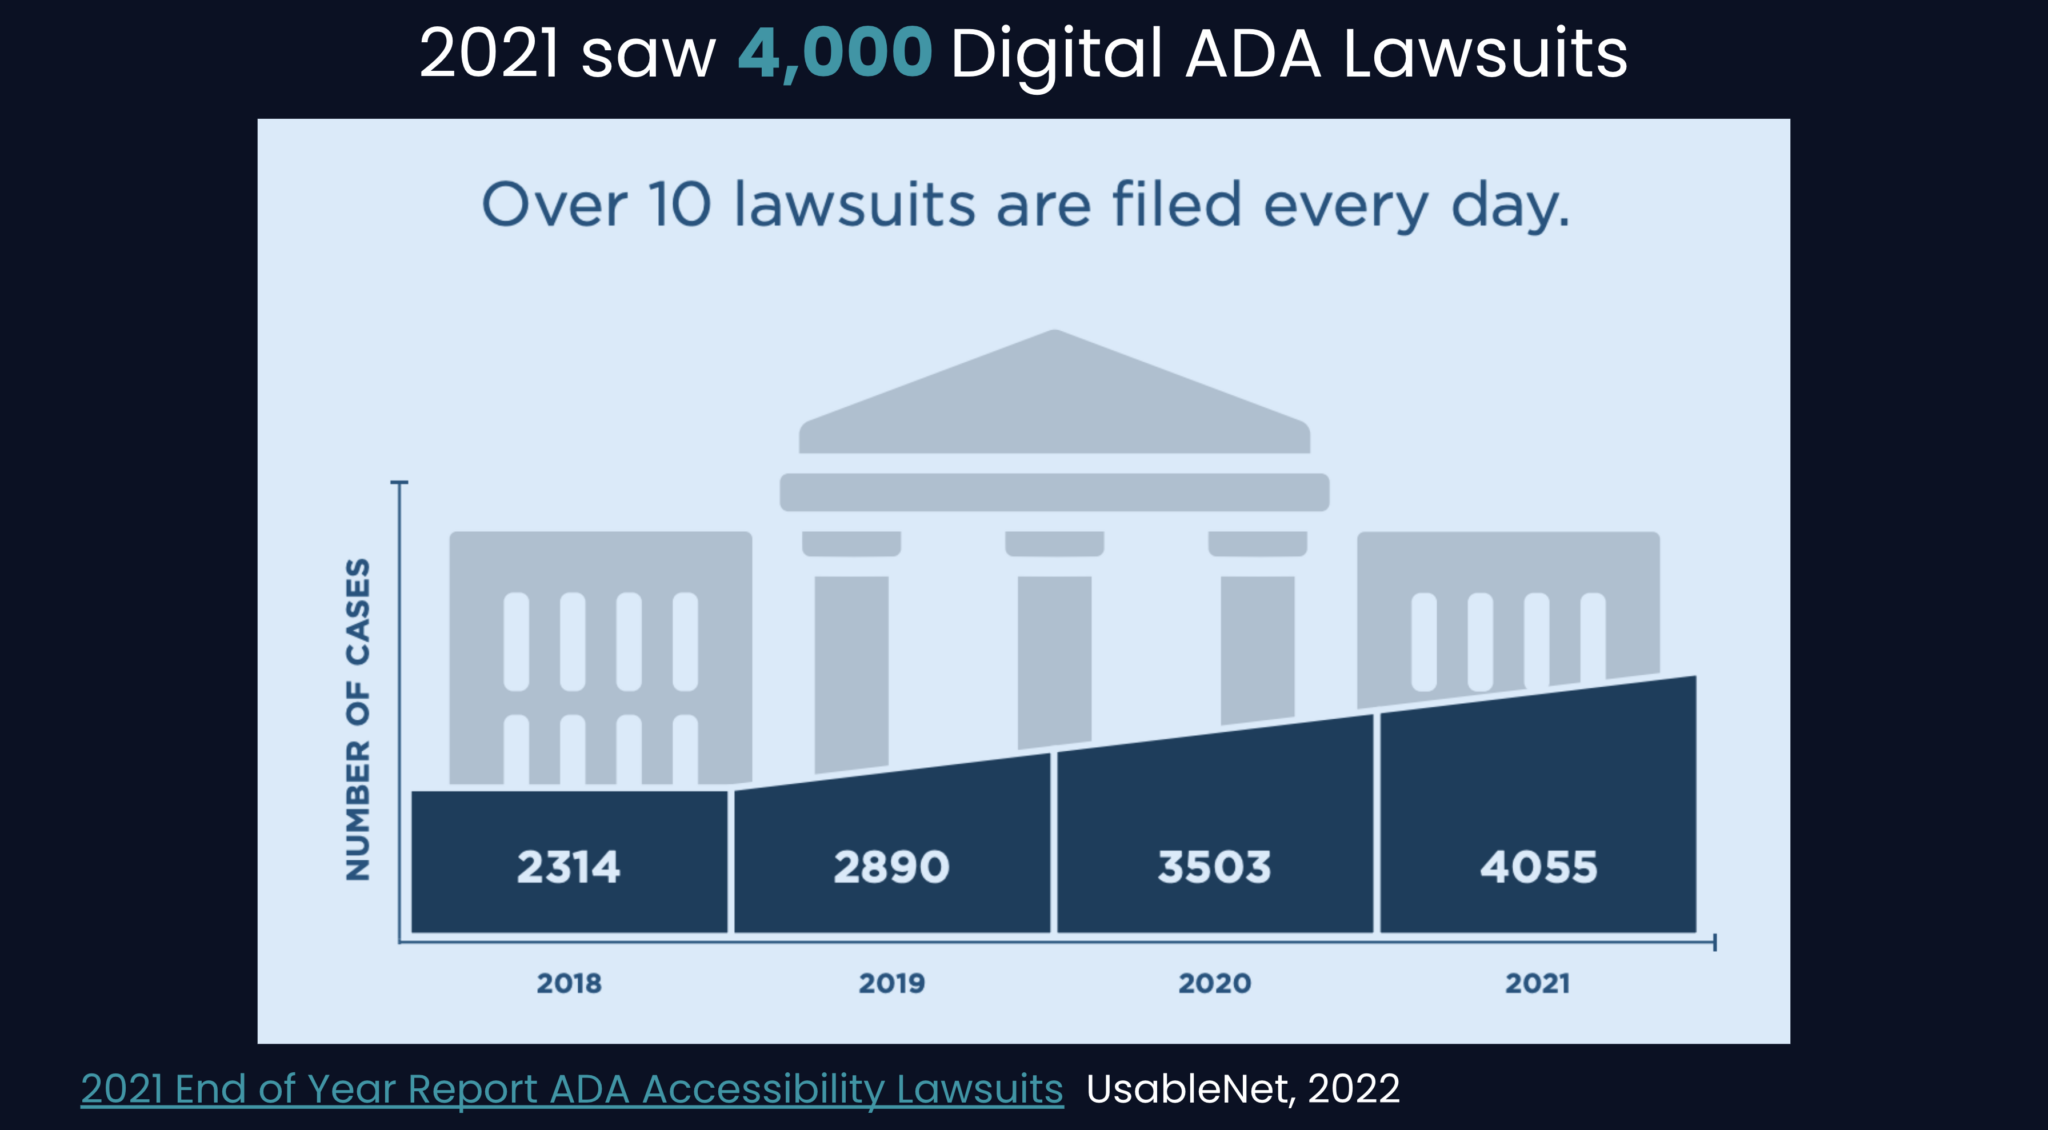 Statistics on ADA compliance - over 4,000 digital ADA lawsuits occured in 2021